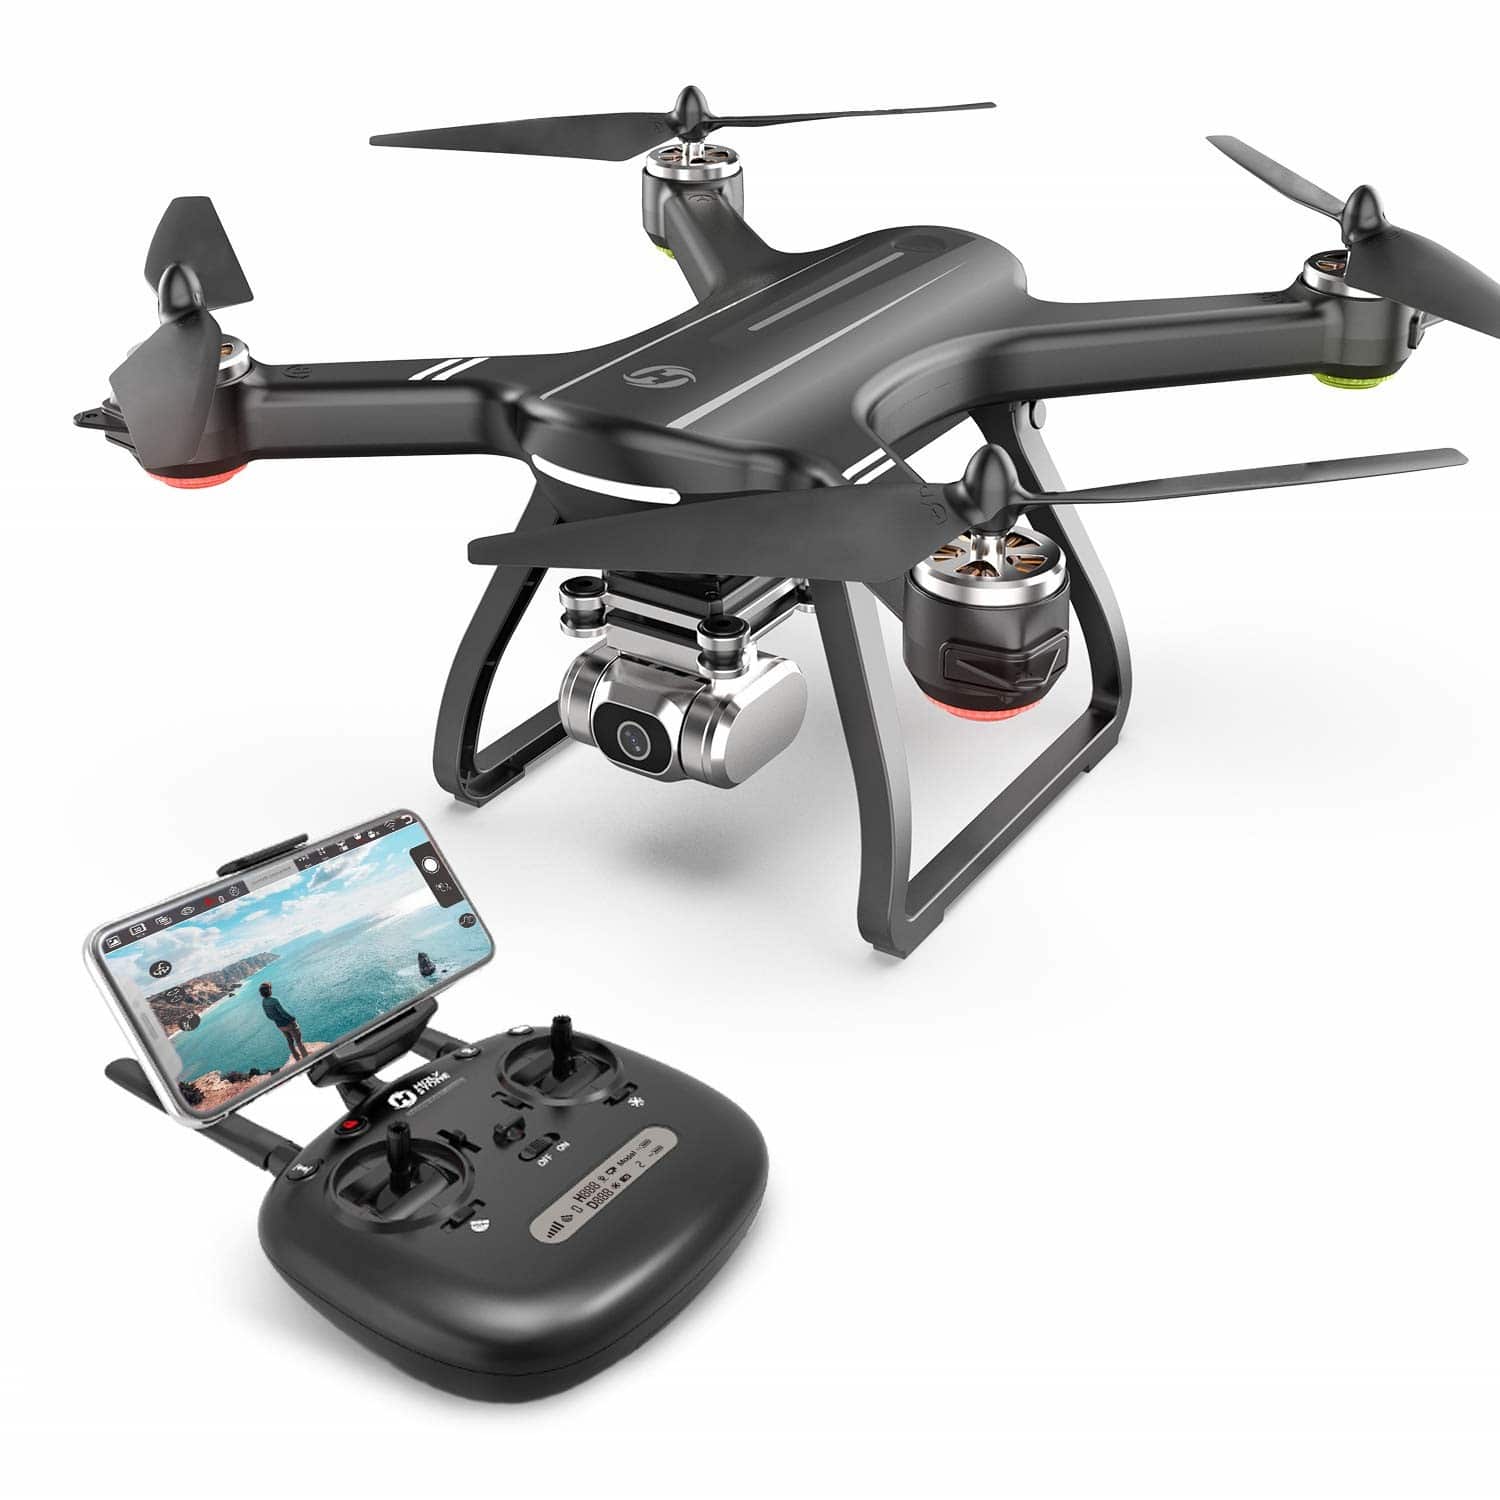 Test du drone Ophelia Holy Stone HS700D